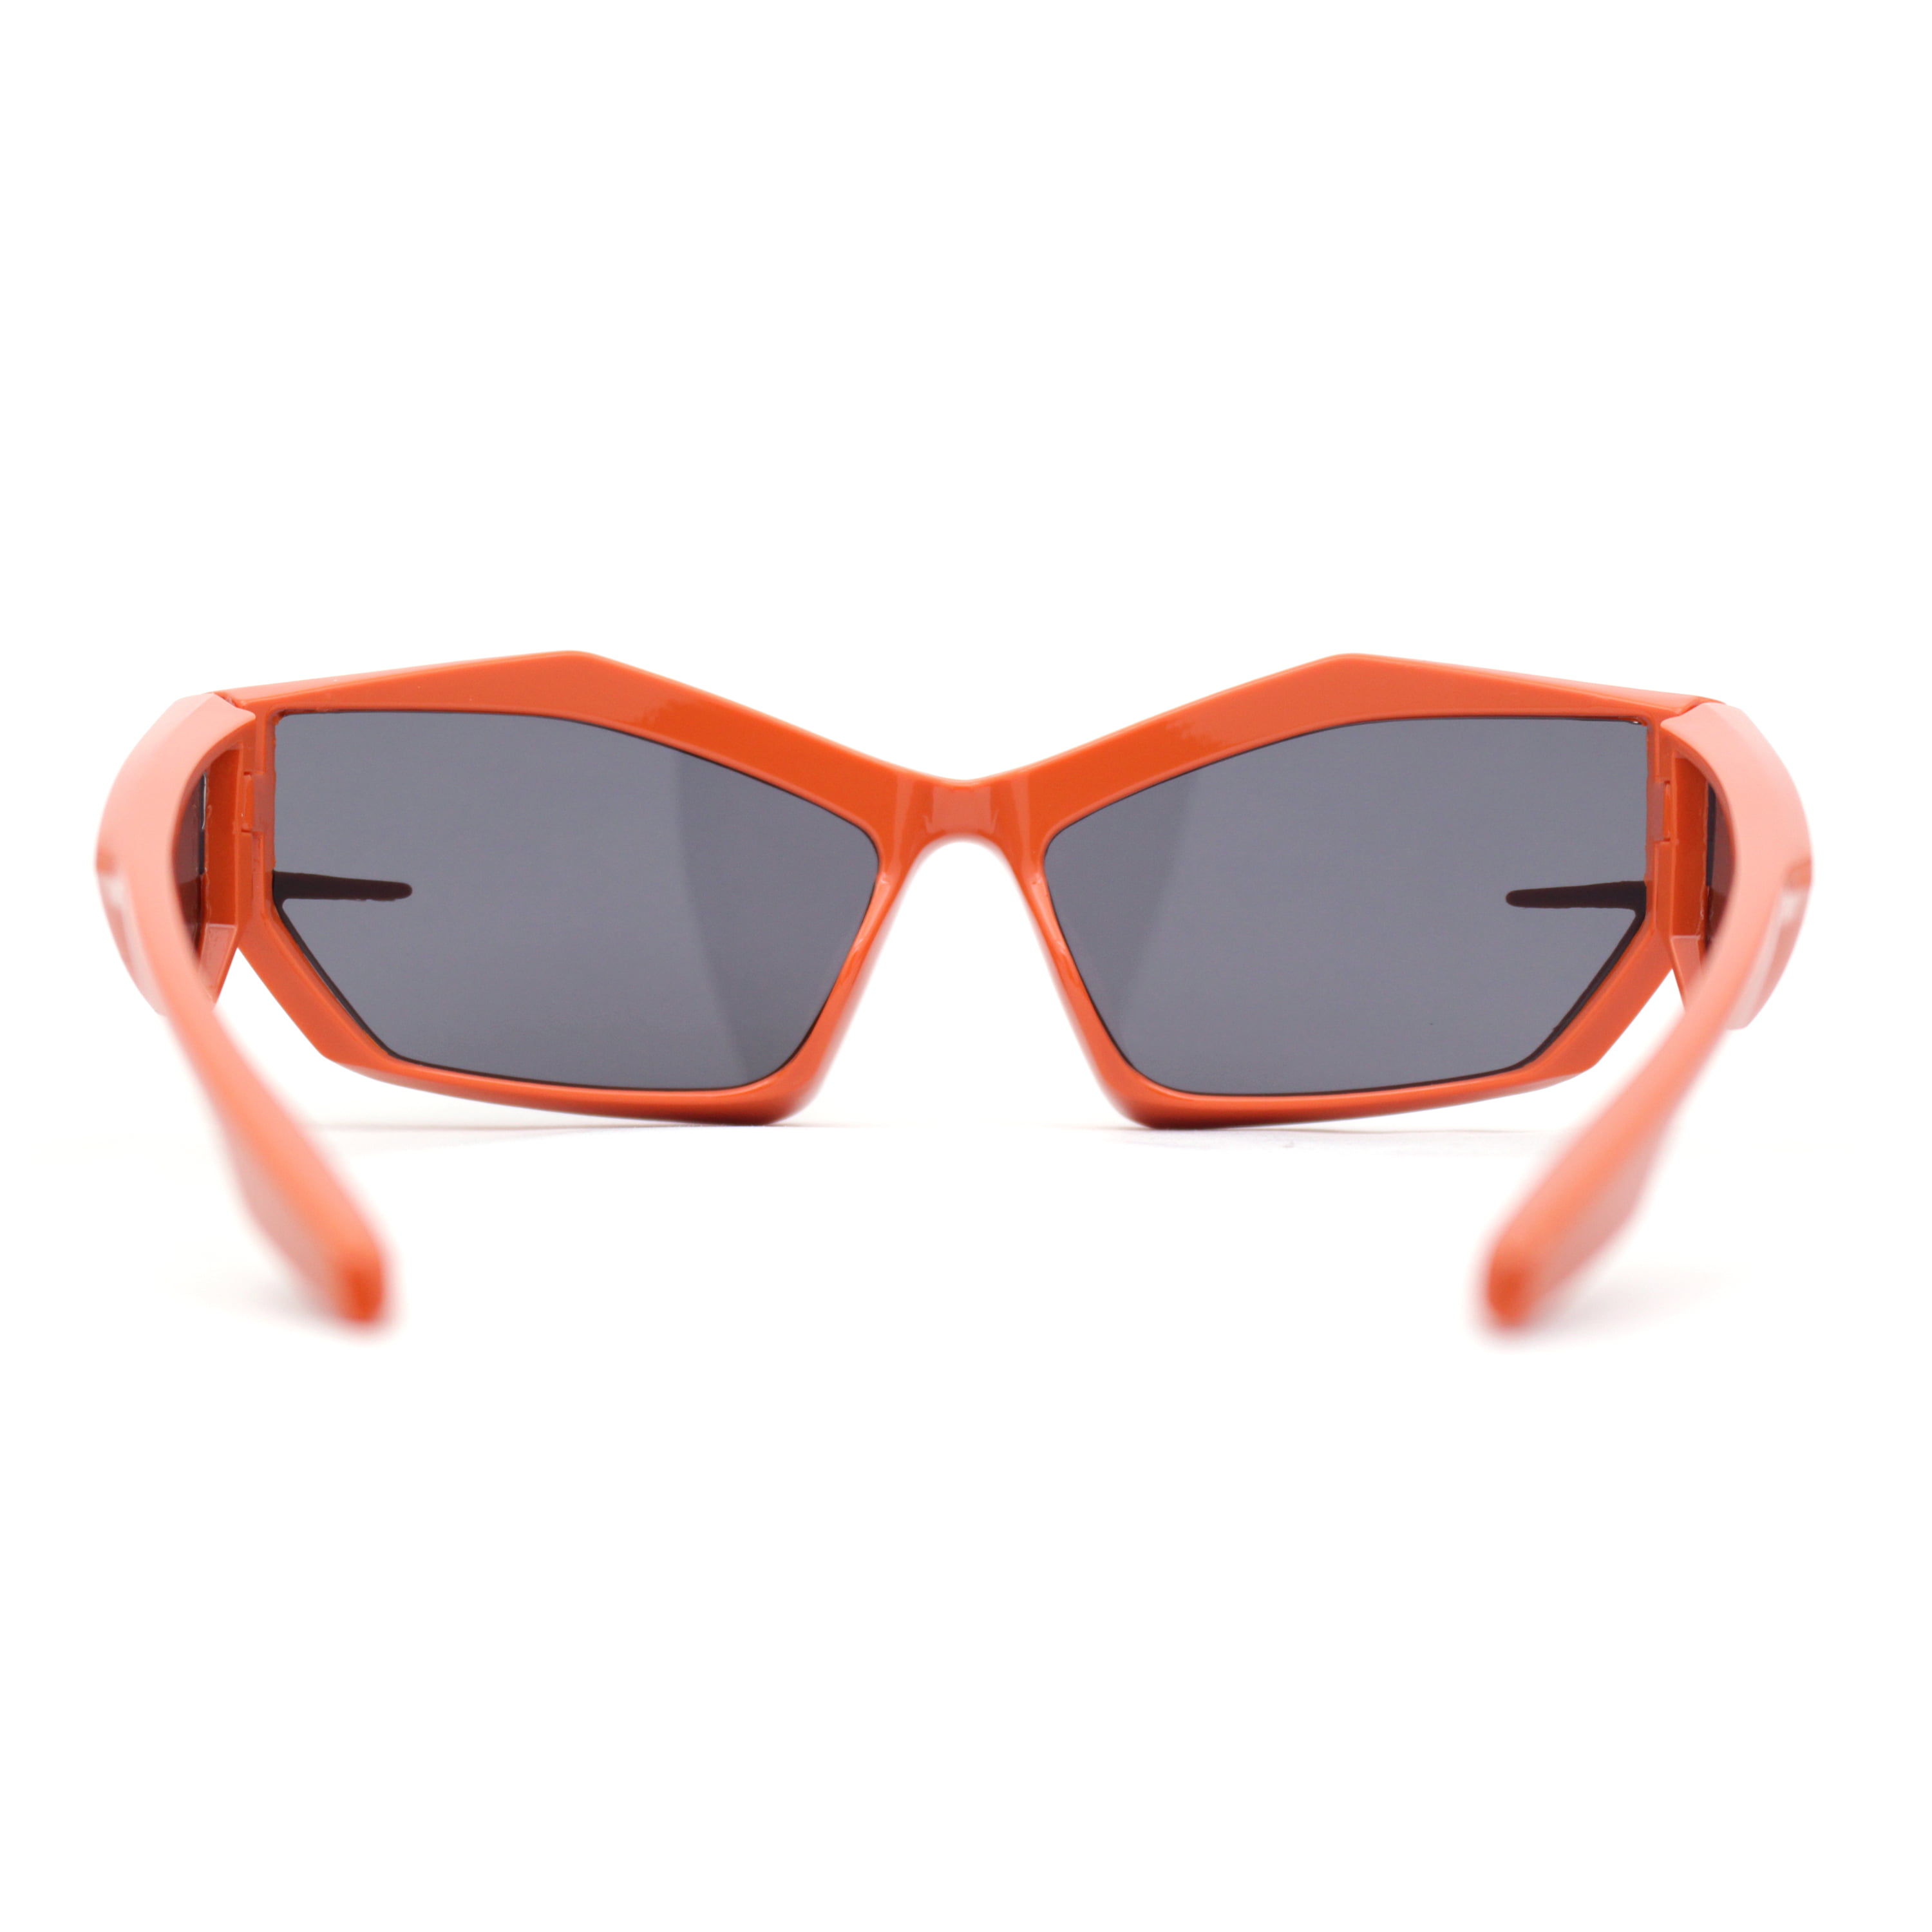 Unique Trendy 90s Sport Plastic Side Visor Wrap Around Sunglasses Orange -  Black | Schmuck-Sets